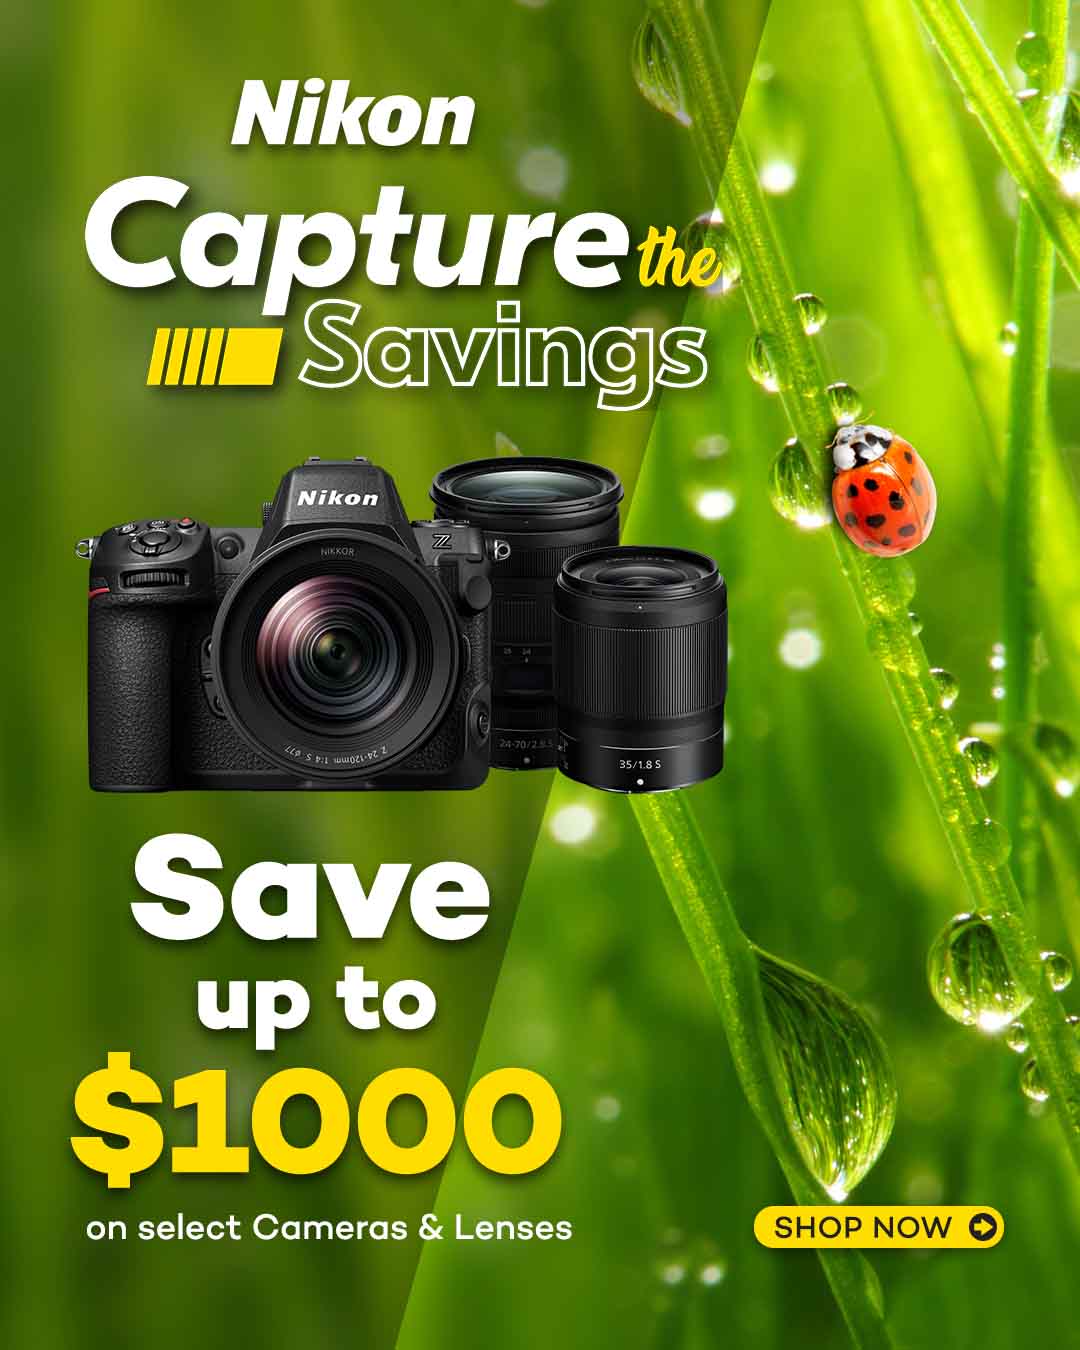 Nikon Capture the Savings - Save up to $1000